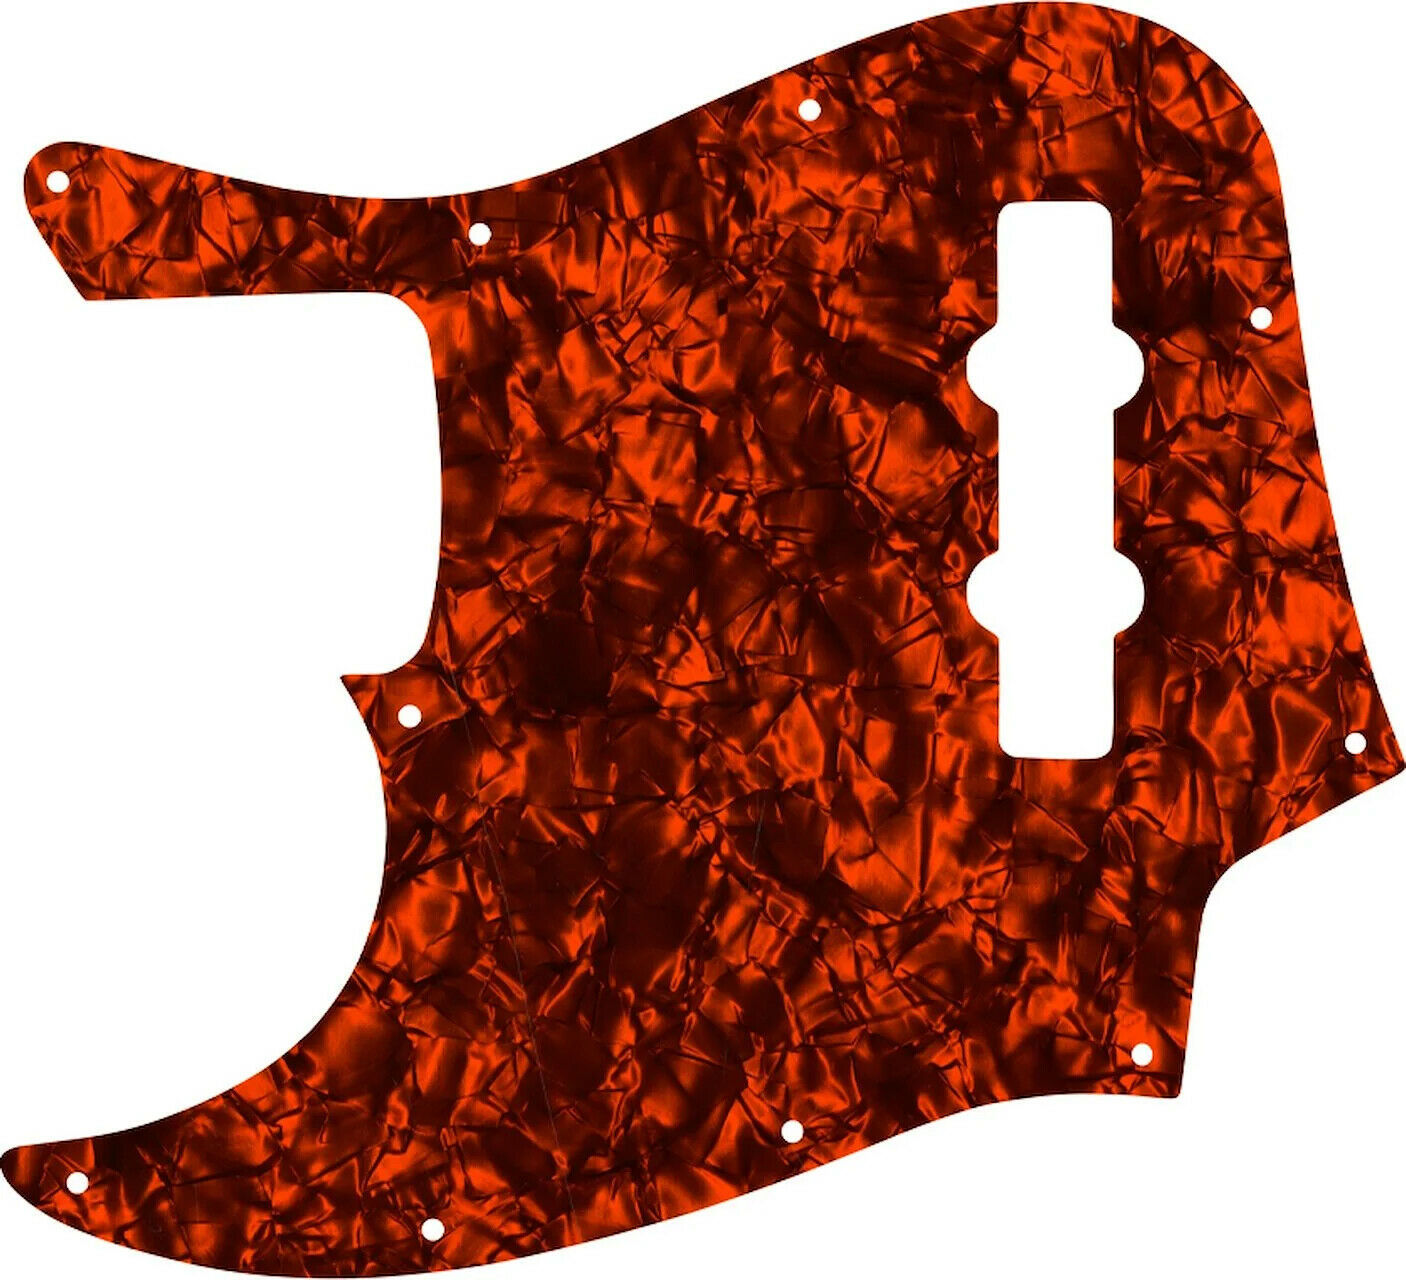 Wd Music Wd custom pickguard for left hand fender highway one jazz bass #28op orange p...